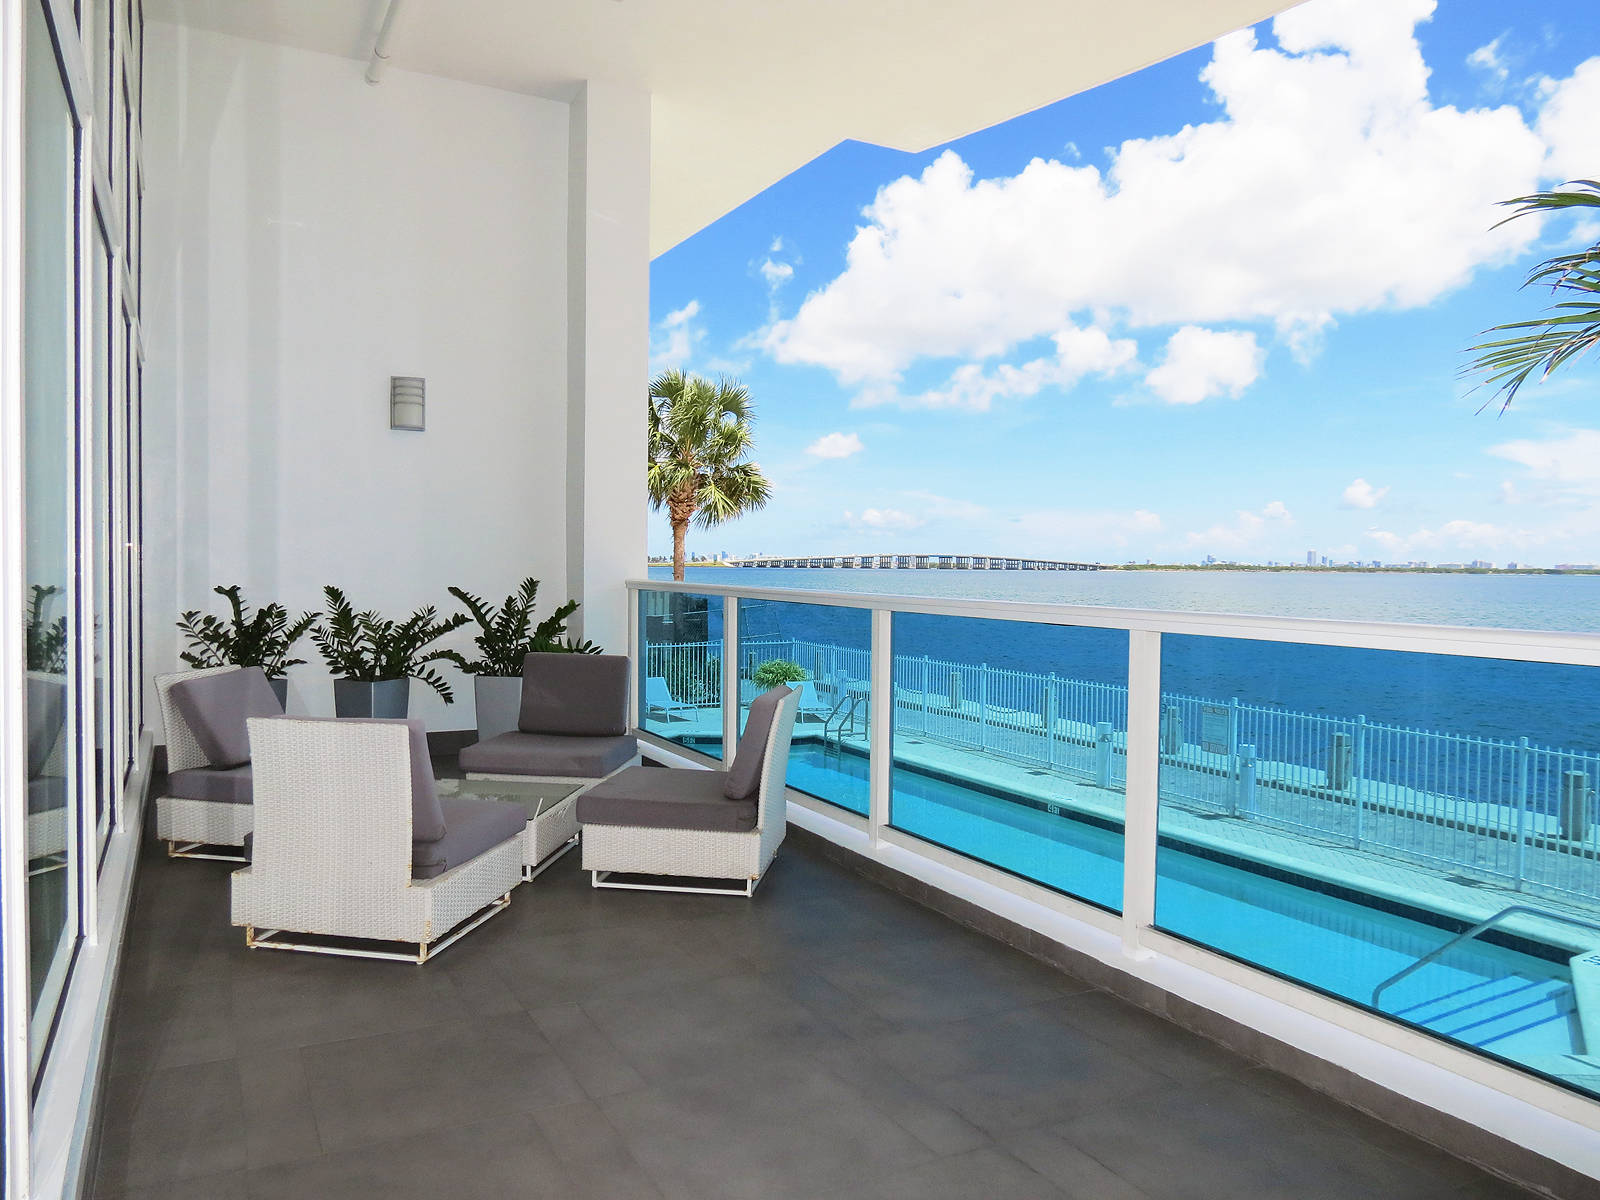 New-Wave-Miami-Lounge-Area